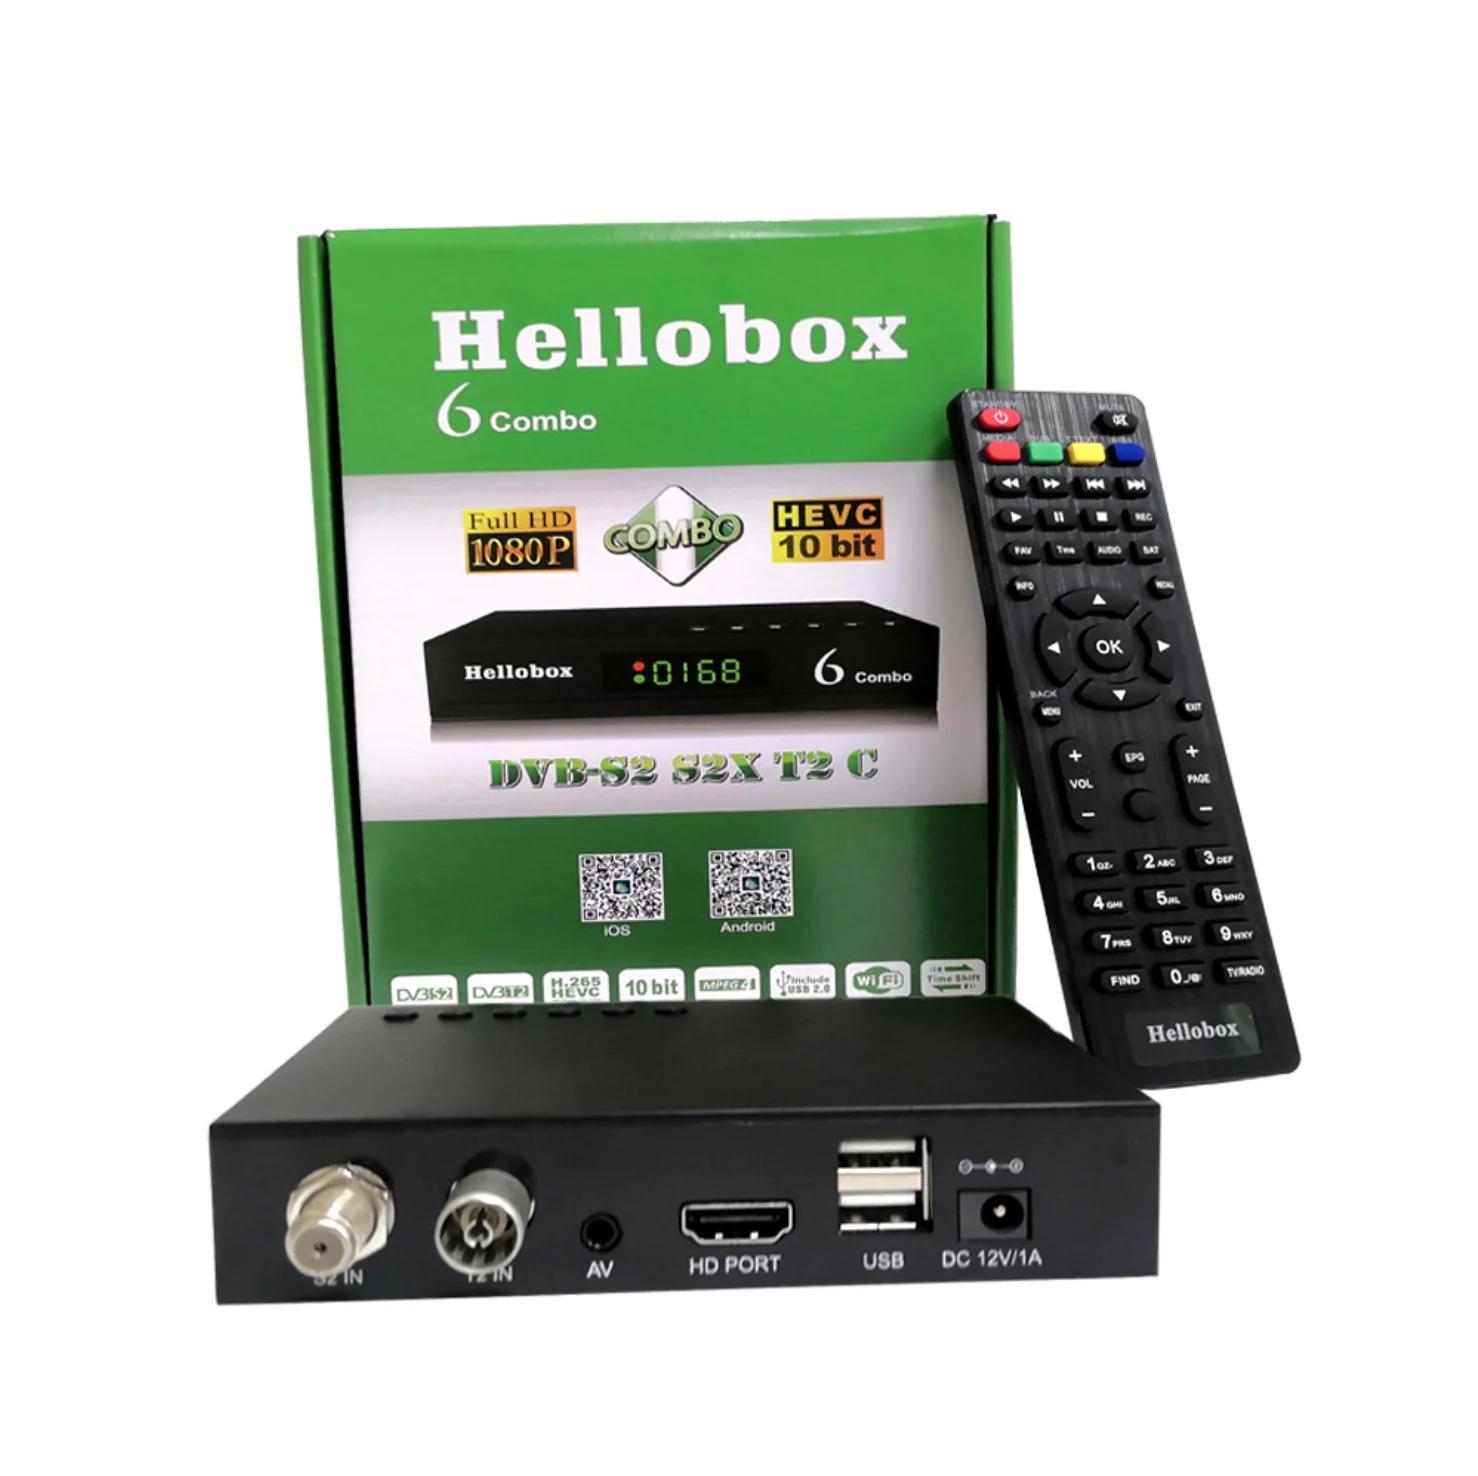 

Hellobox 6 combo H.265 DVB-S2X DVB-T2/C Auto Biss Powervu Cline Scam+ free Satellite Receiver IPTV Set top box